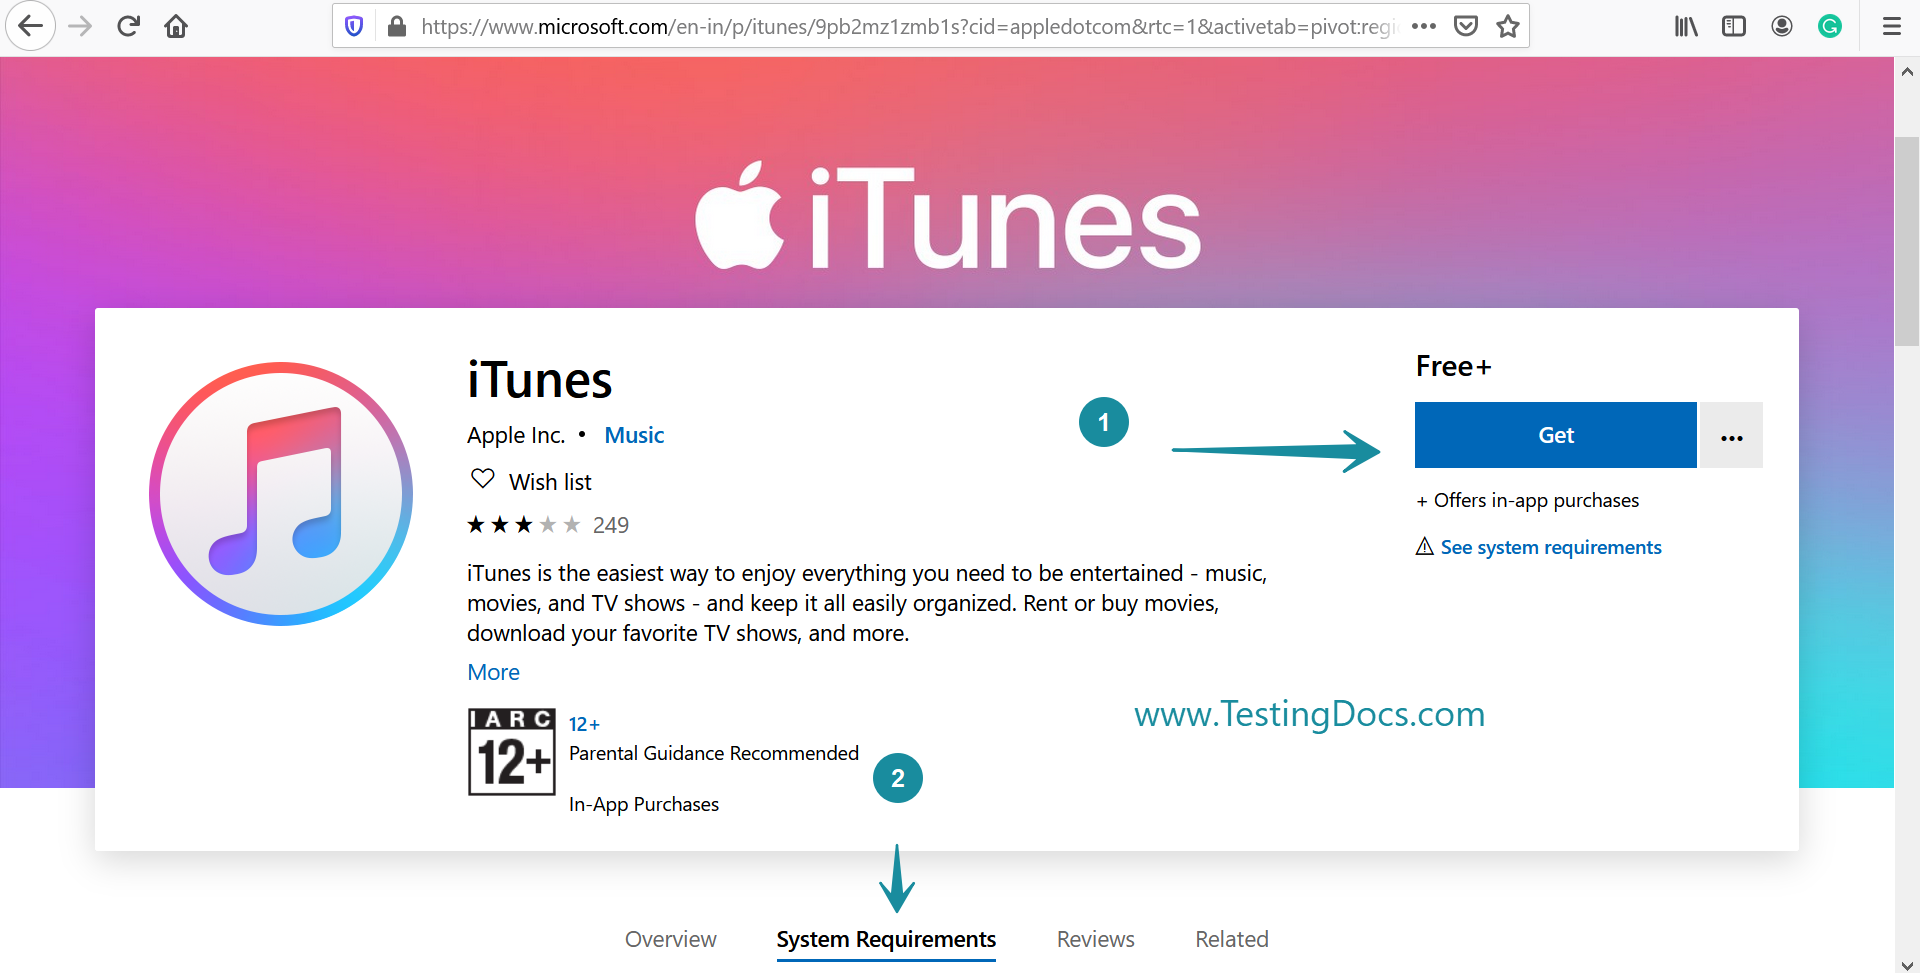 iTunes Microsft Store